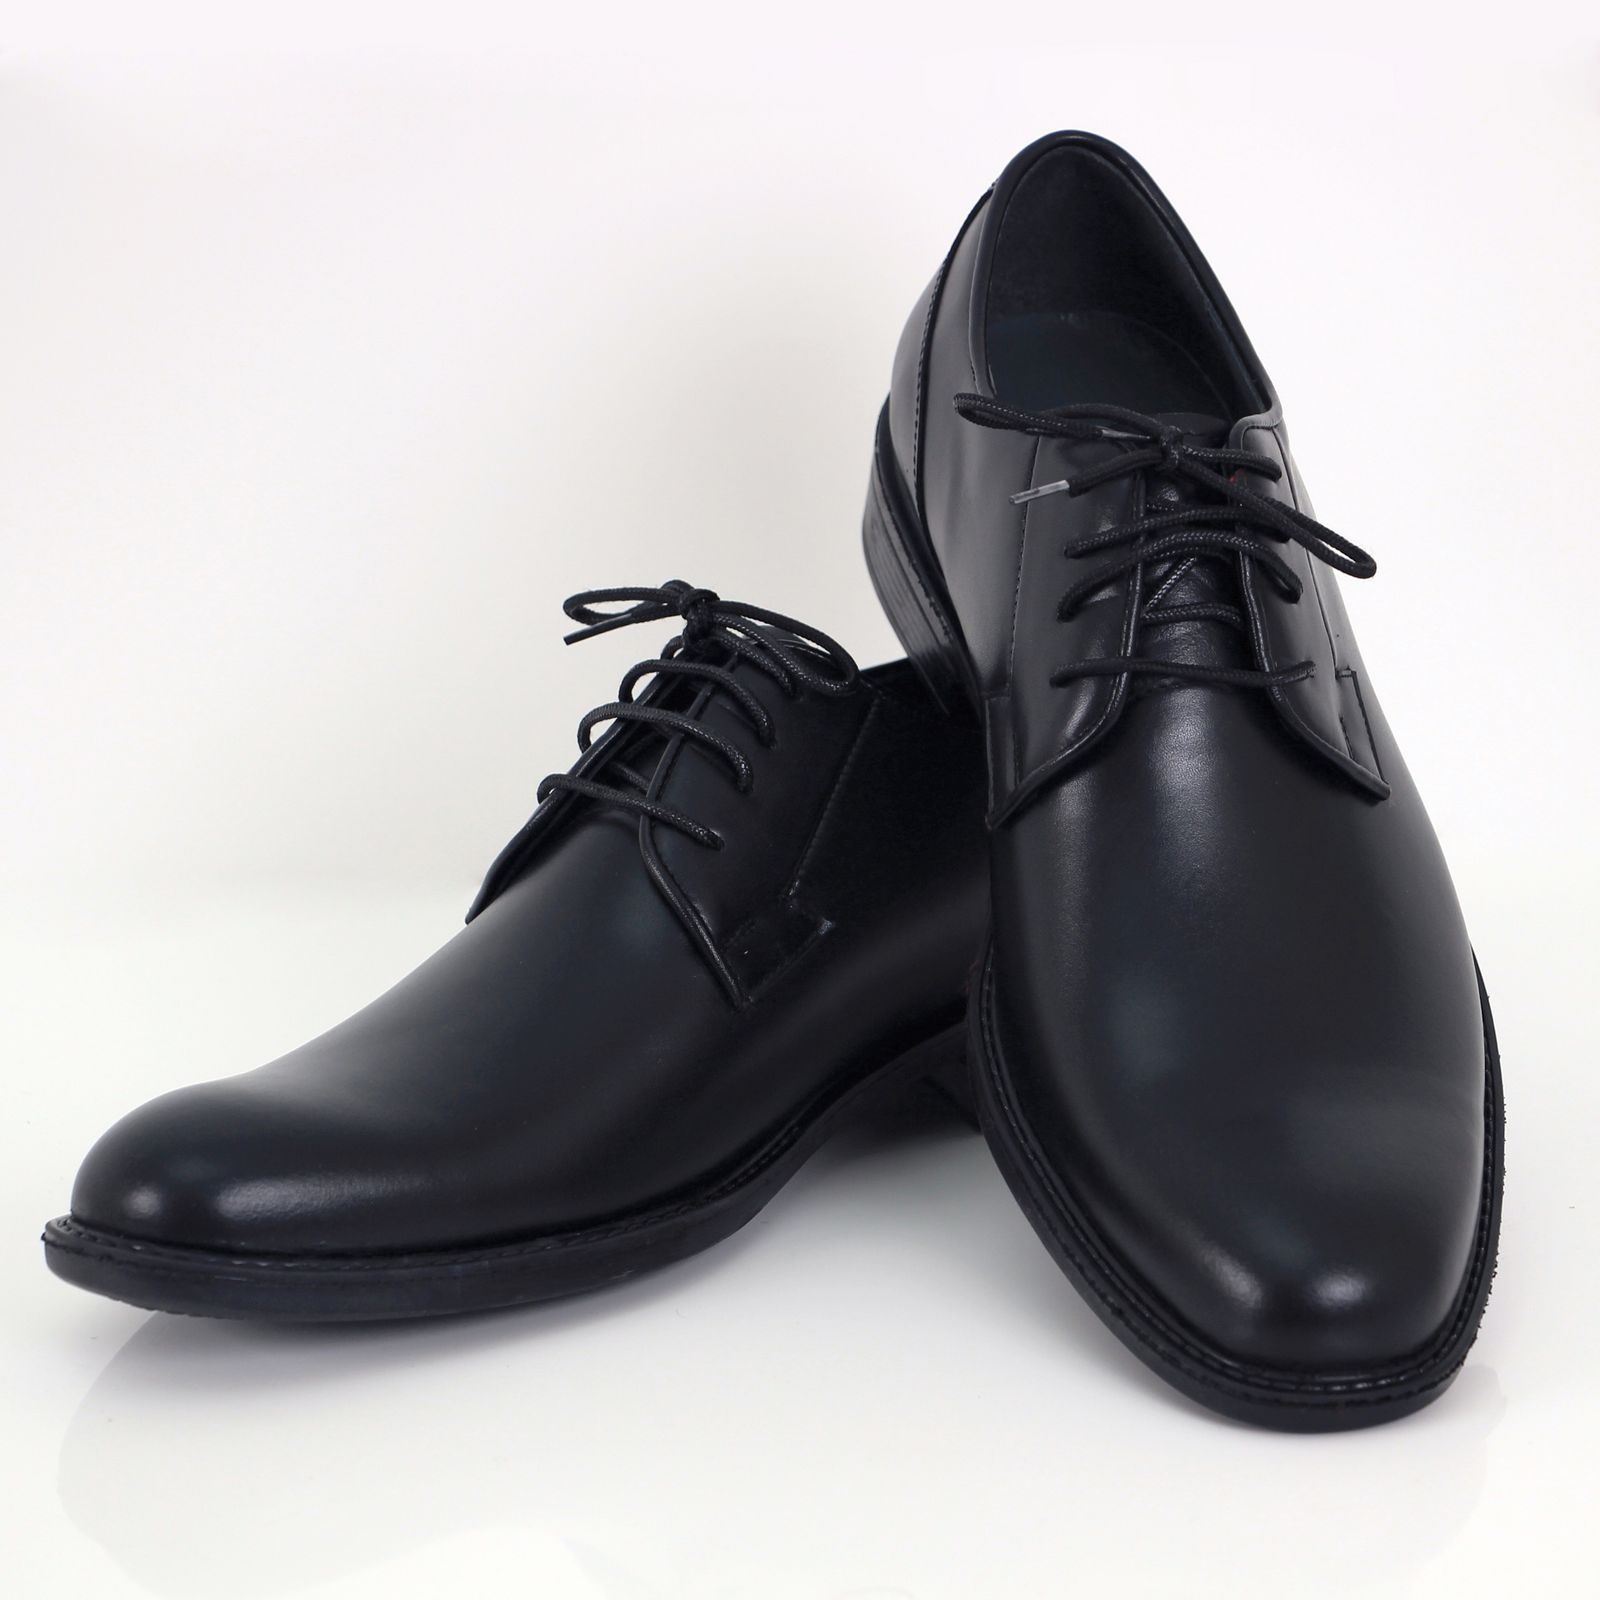 کفش مردانه چرم بارز مدل DK81 -  - 7